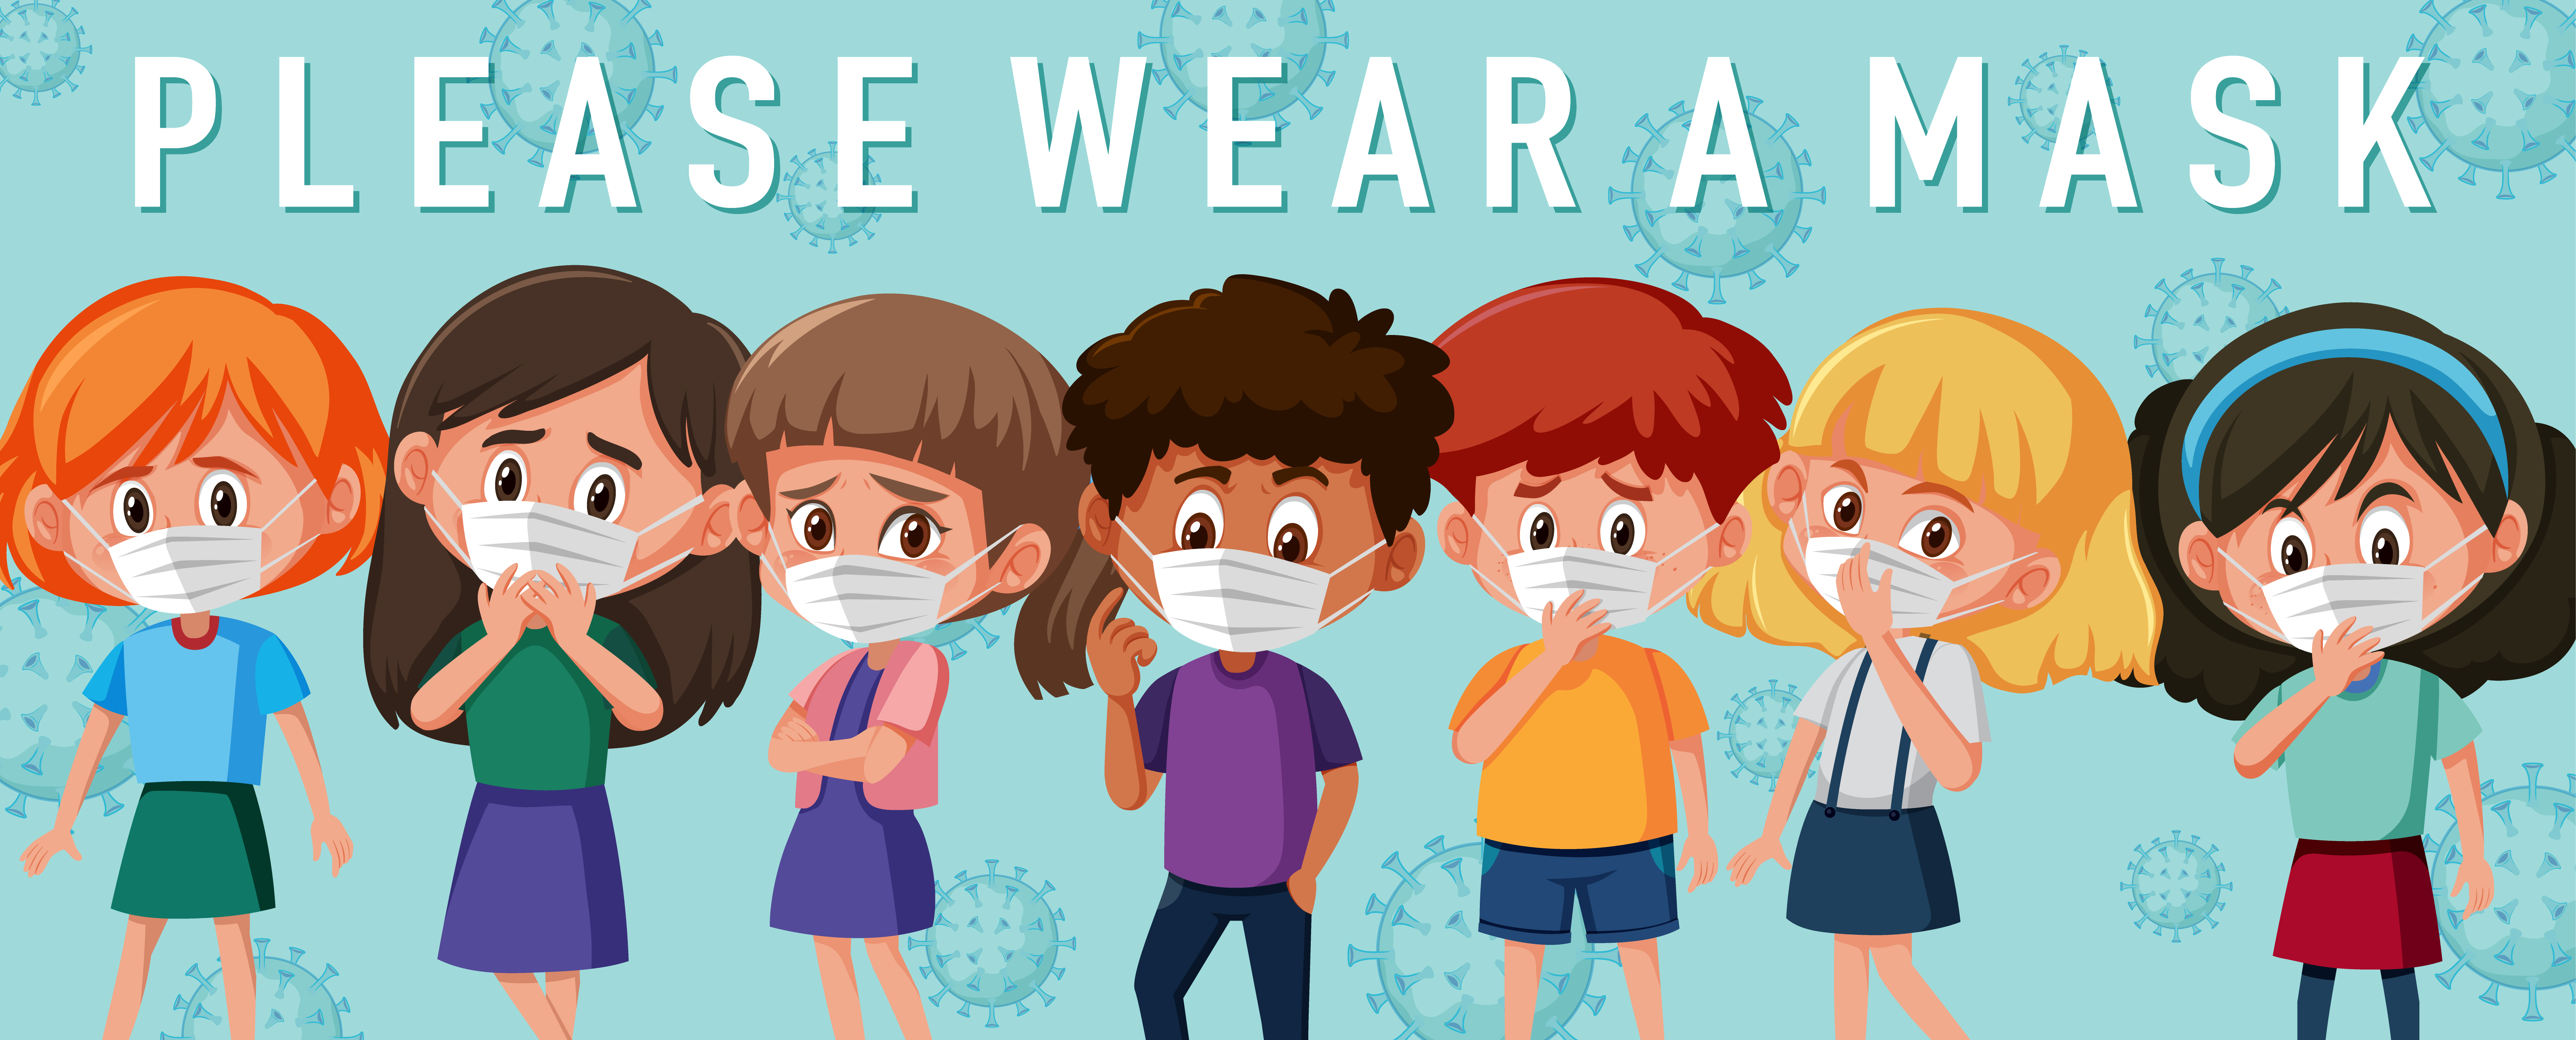 Download Kids wearing mask template - Download Free Vectors ...